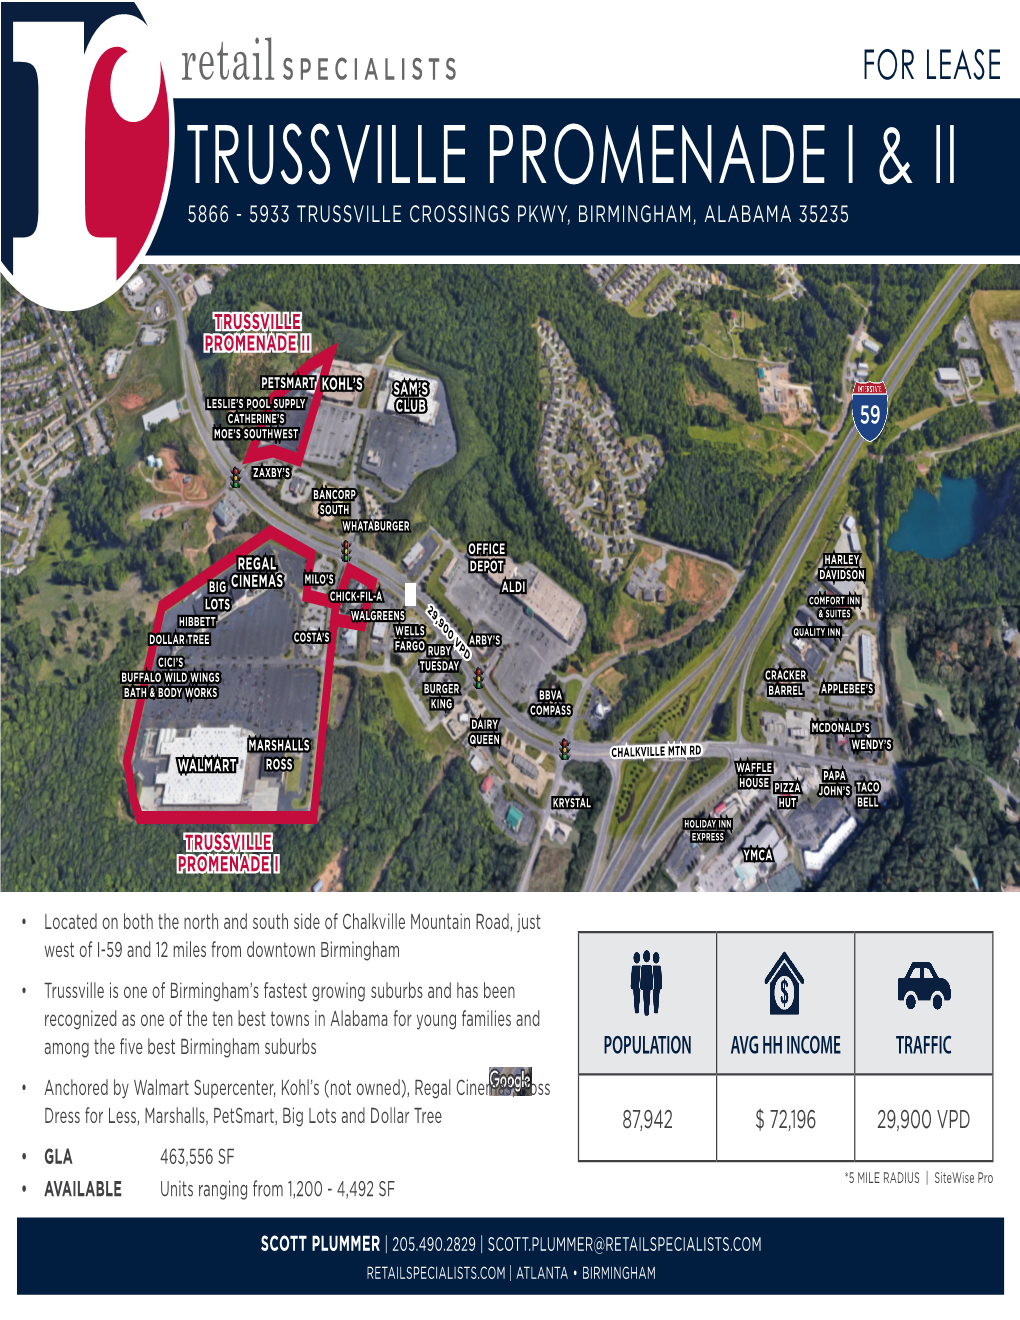 Trussville Promenade I & II Marketing.Indd